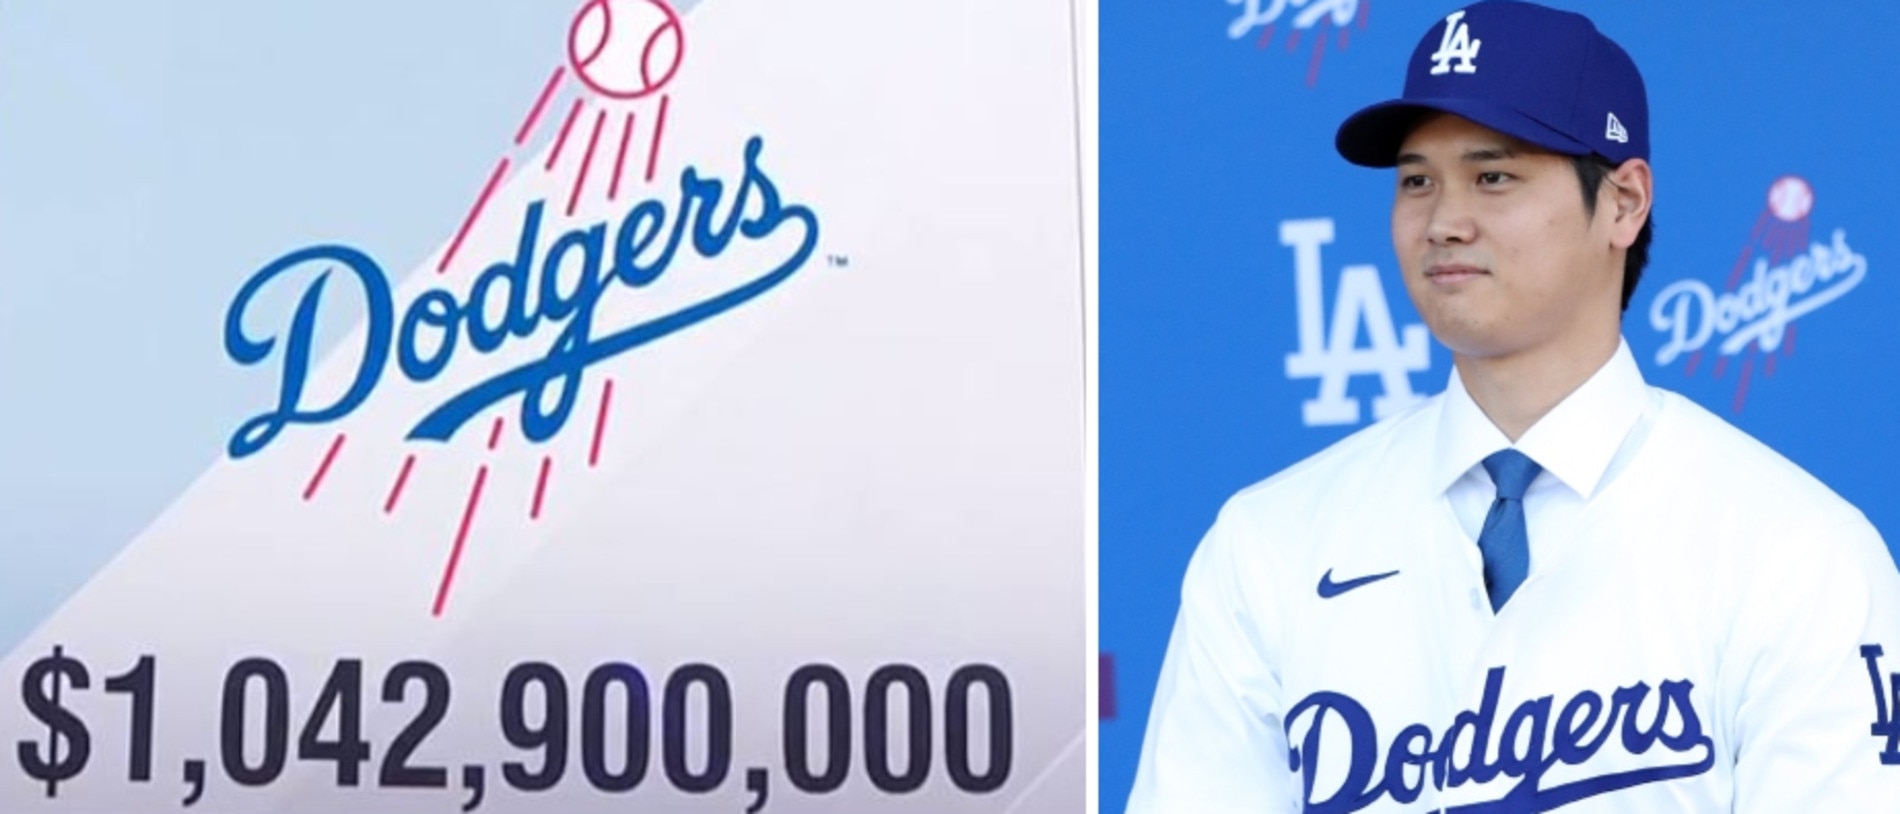 The Dodgers splashed the cash.